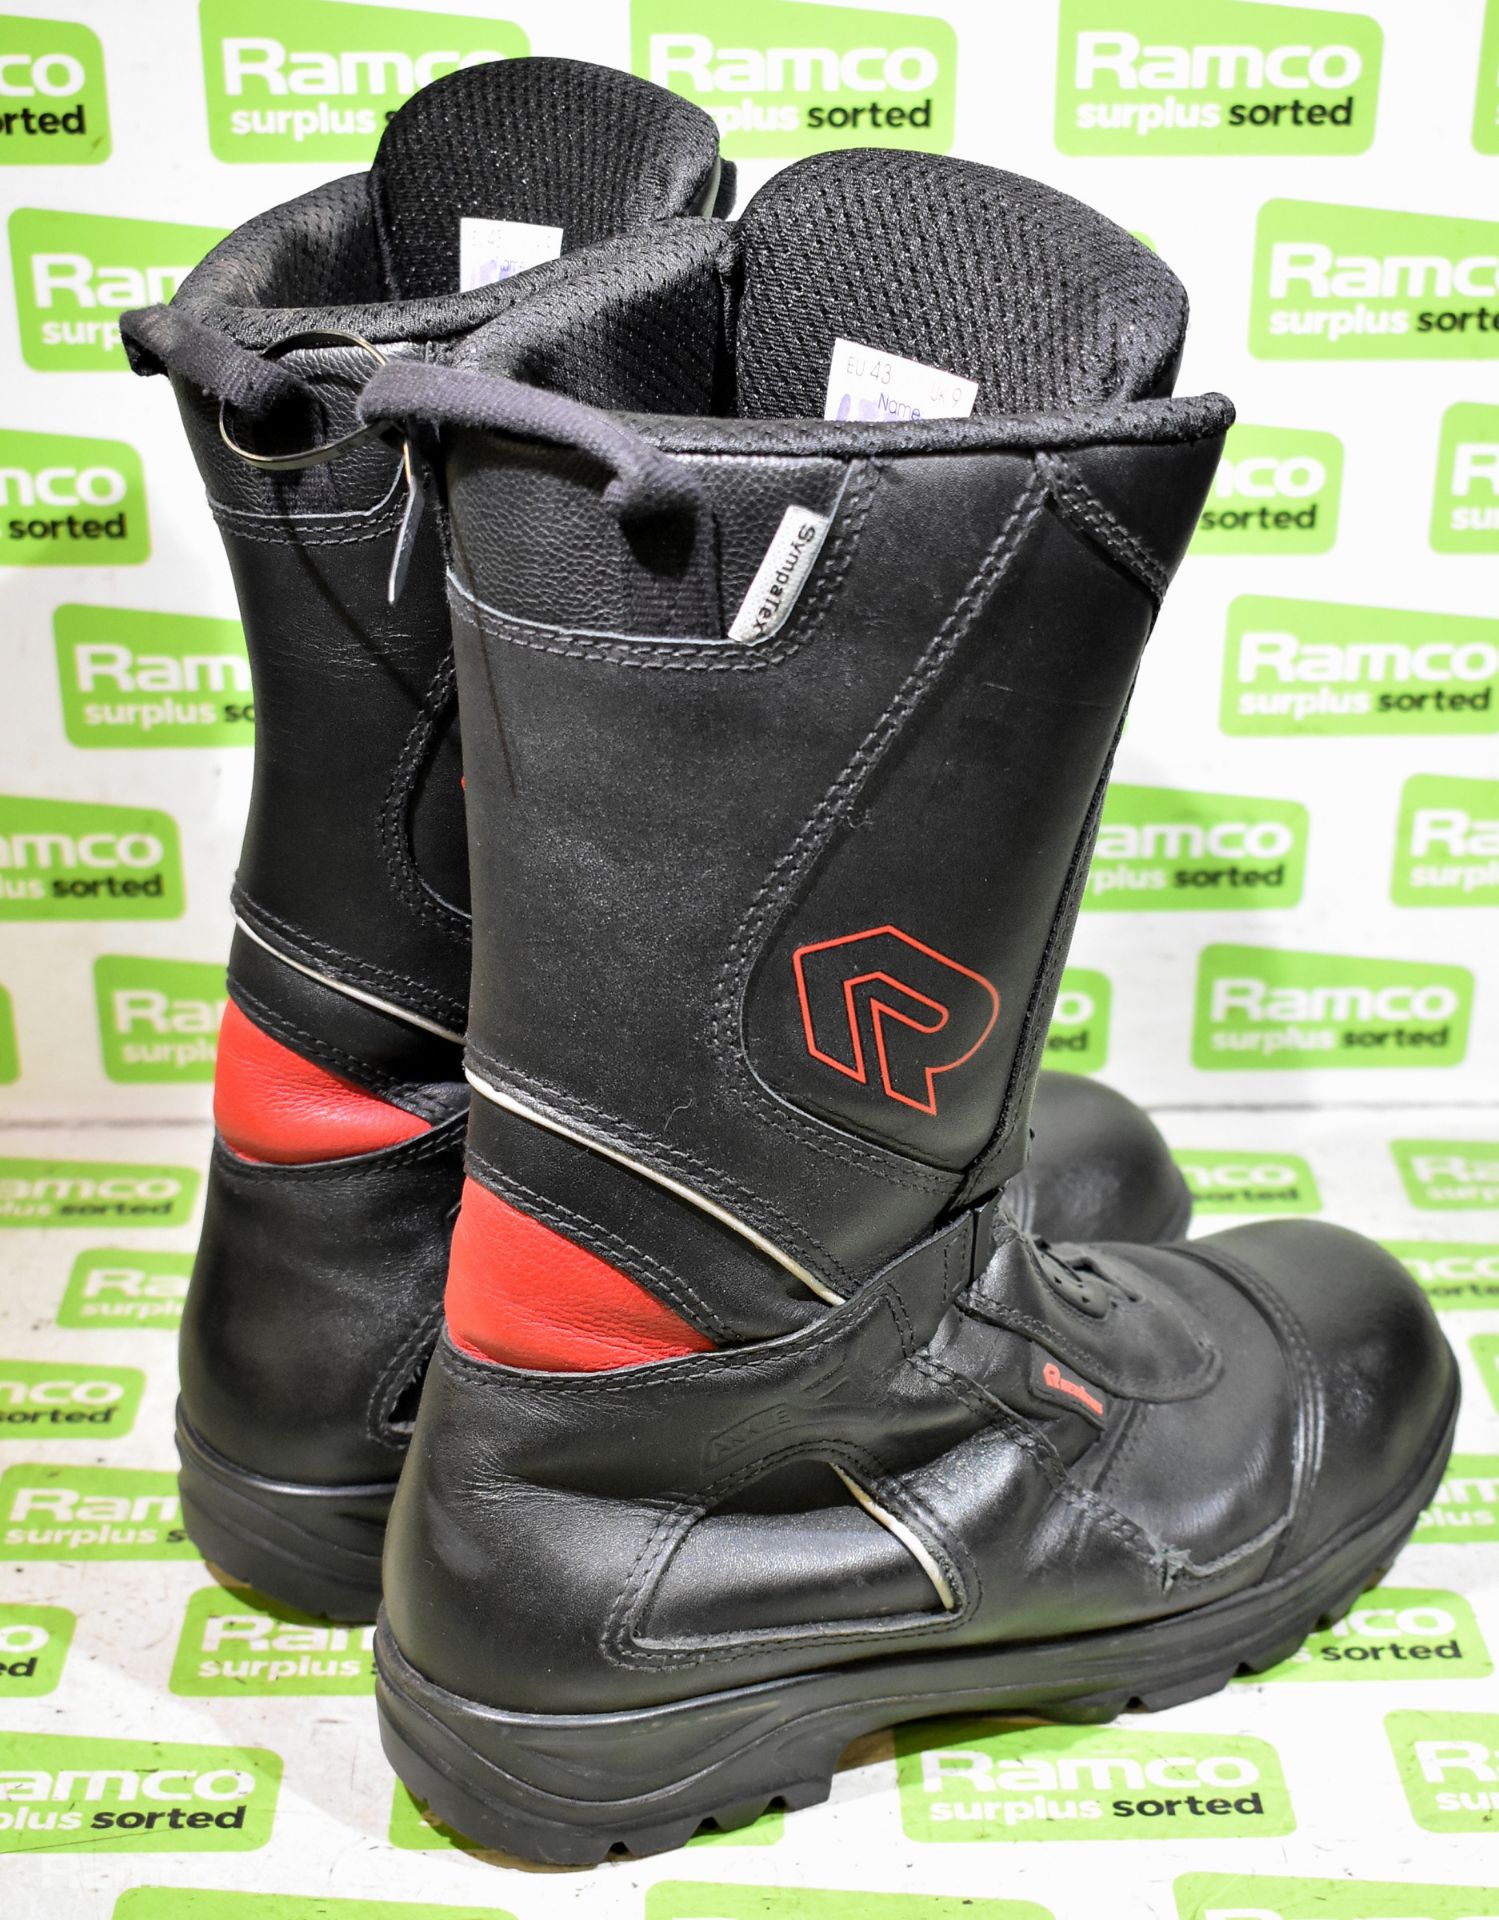 Rosenbauer Sympatex Fire & Heat Resistant Boots Pair - Size: EU 34, UK 9 - Image 2 of 4